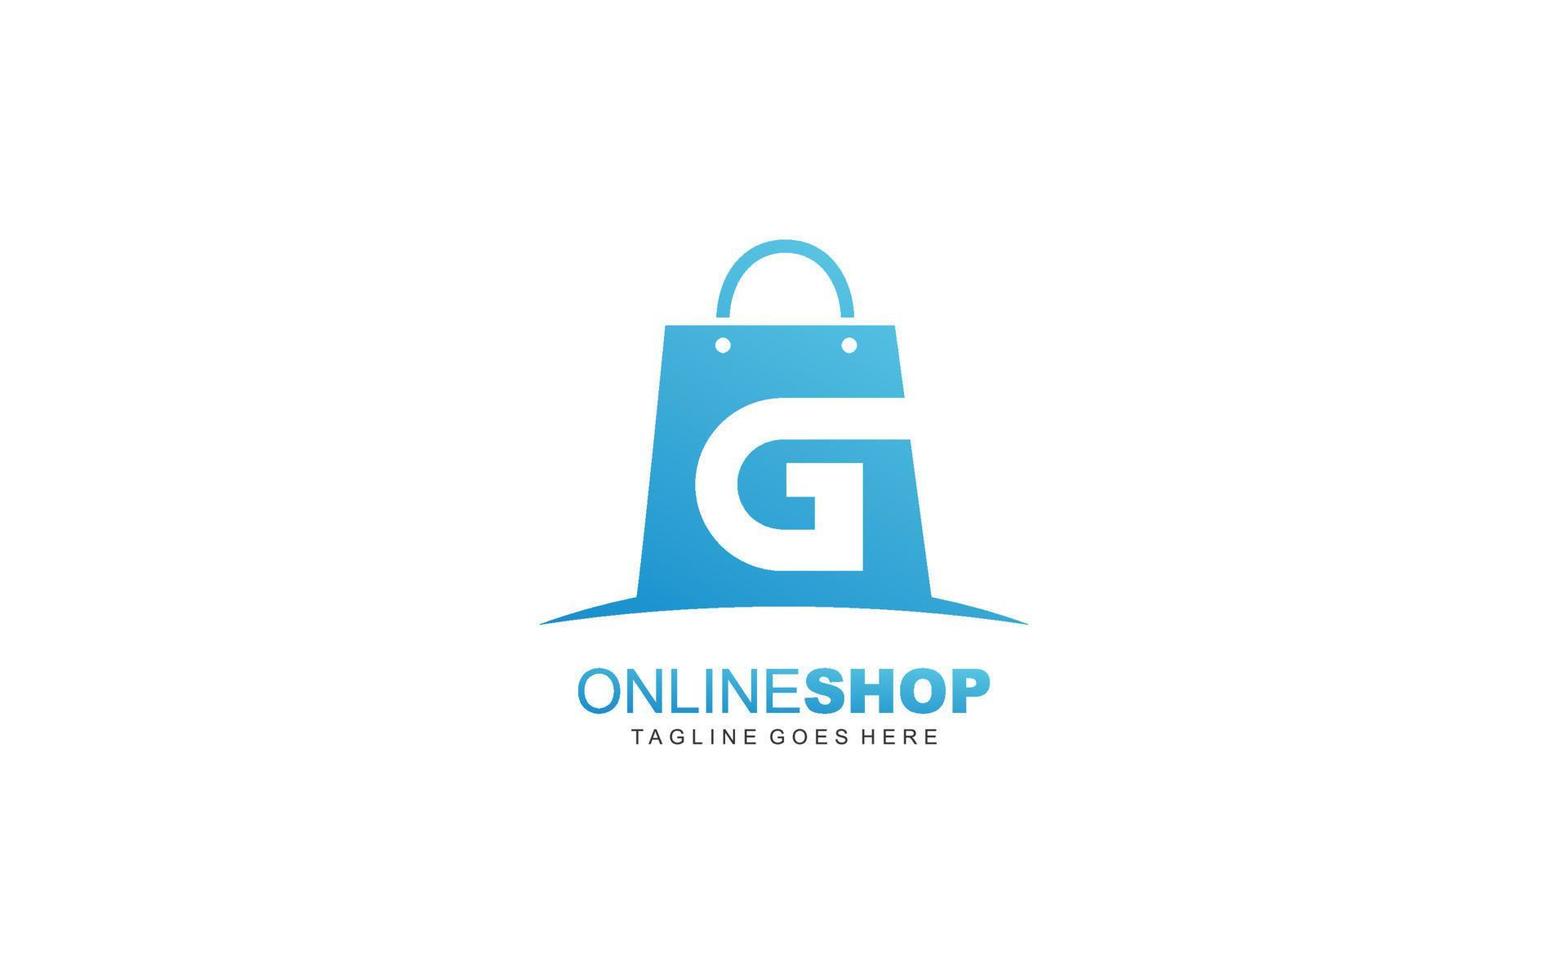 G logo online shop for branding company. BAG template vector illustration for your brand.